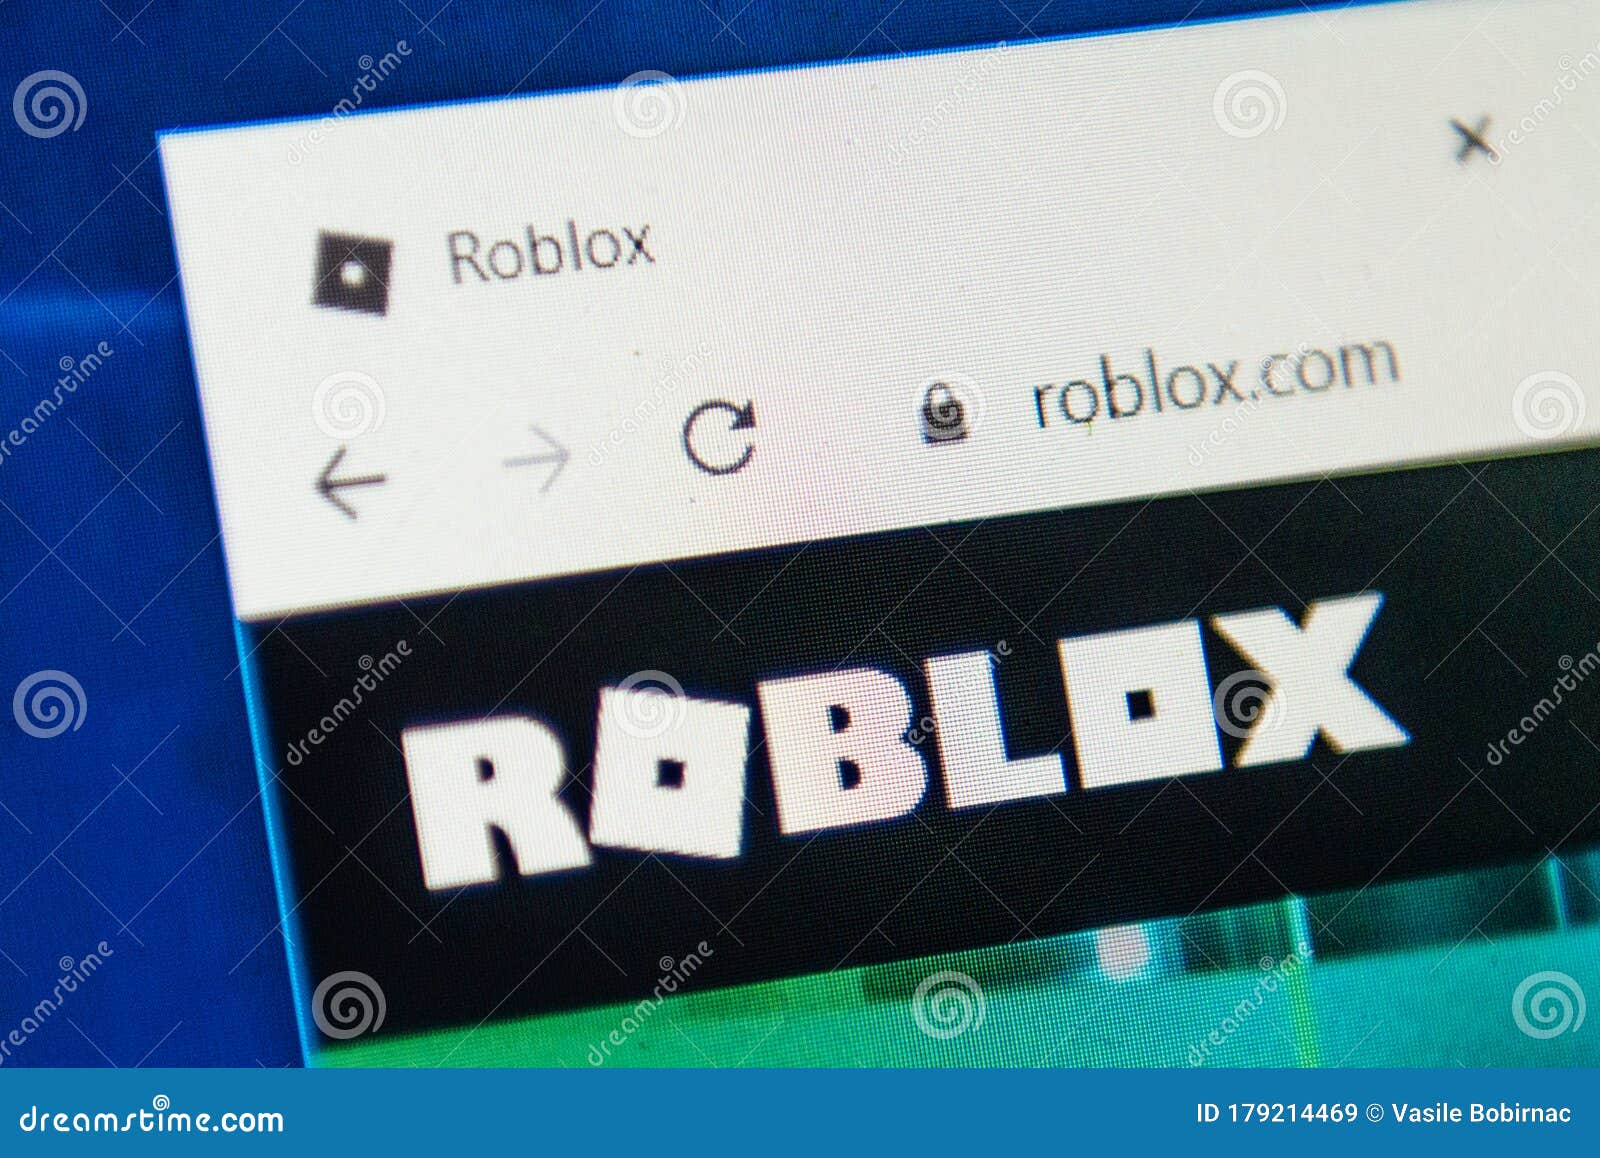 Roblox Com Web Site Selective Focus Editorial Stock Image Image Of Browser Robloxcom 179214469 - site roblox